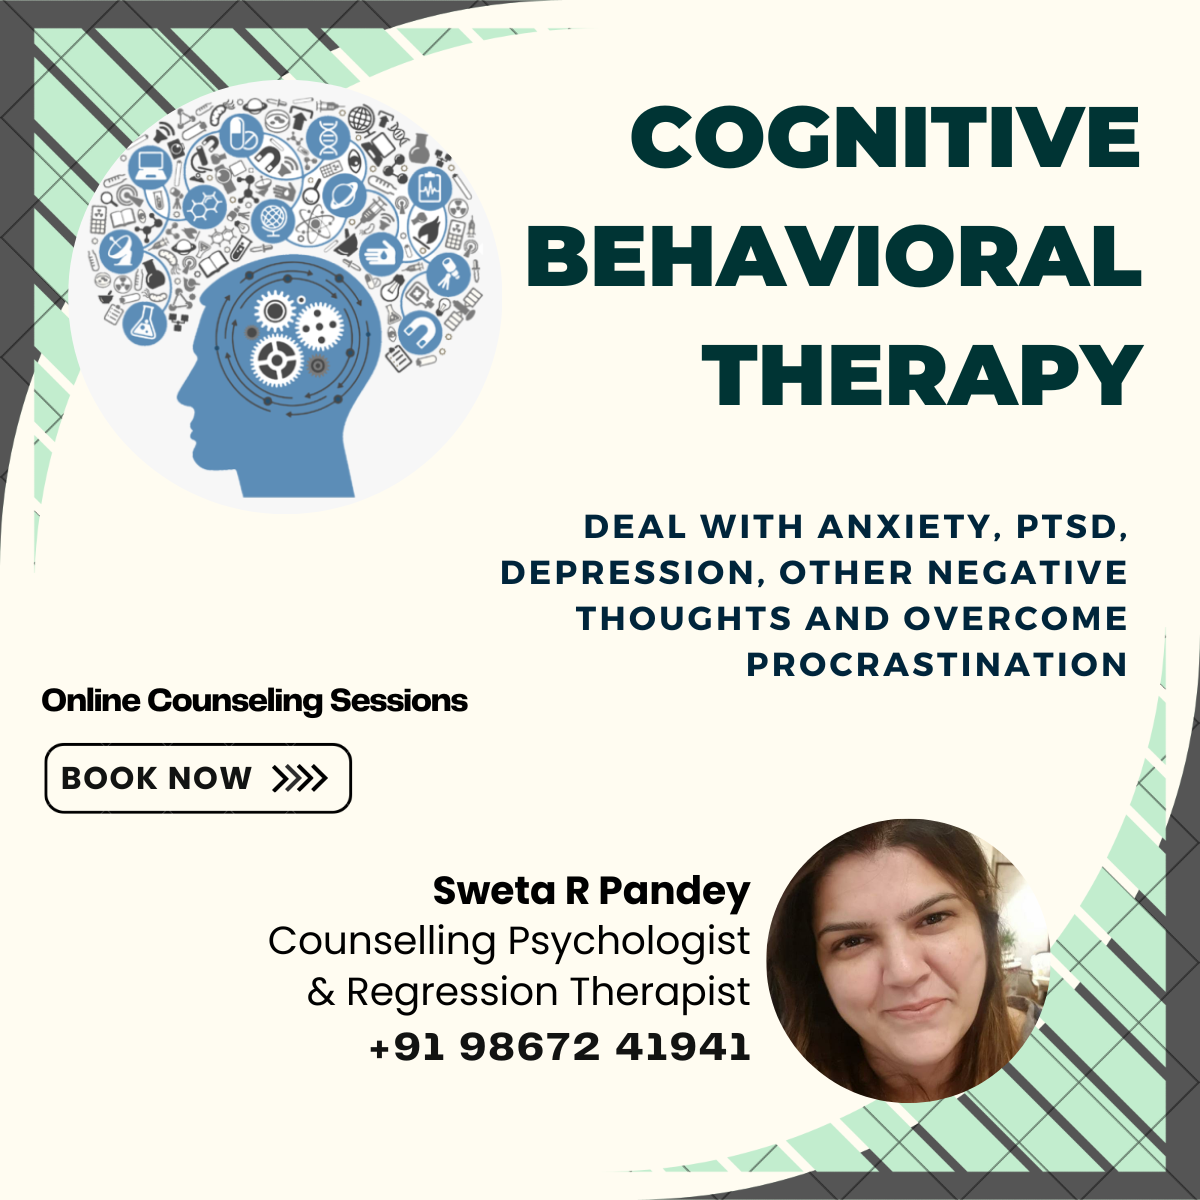 Sweta R Pandey - Cognitive Behavioral Therapy - Juhu